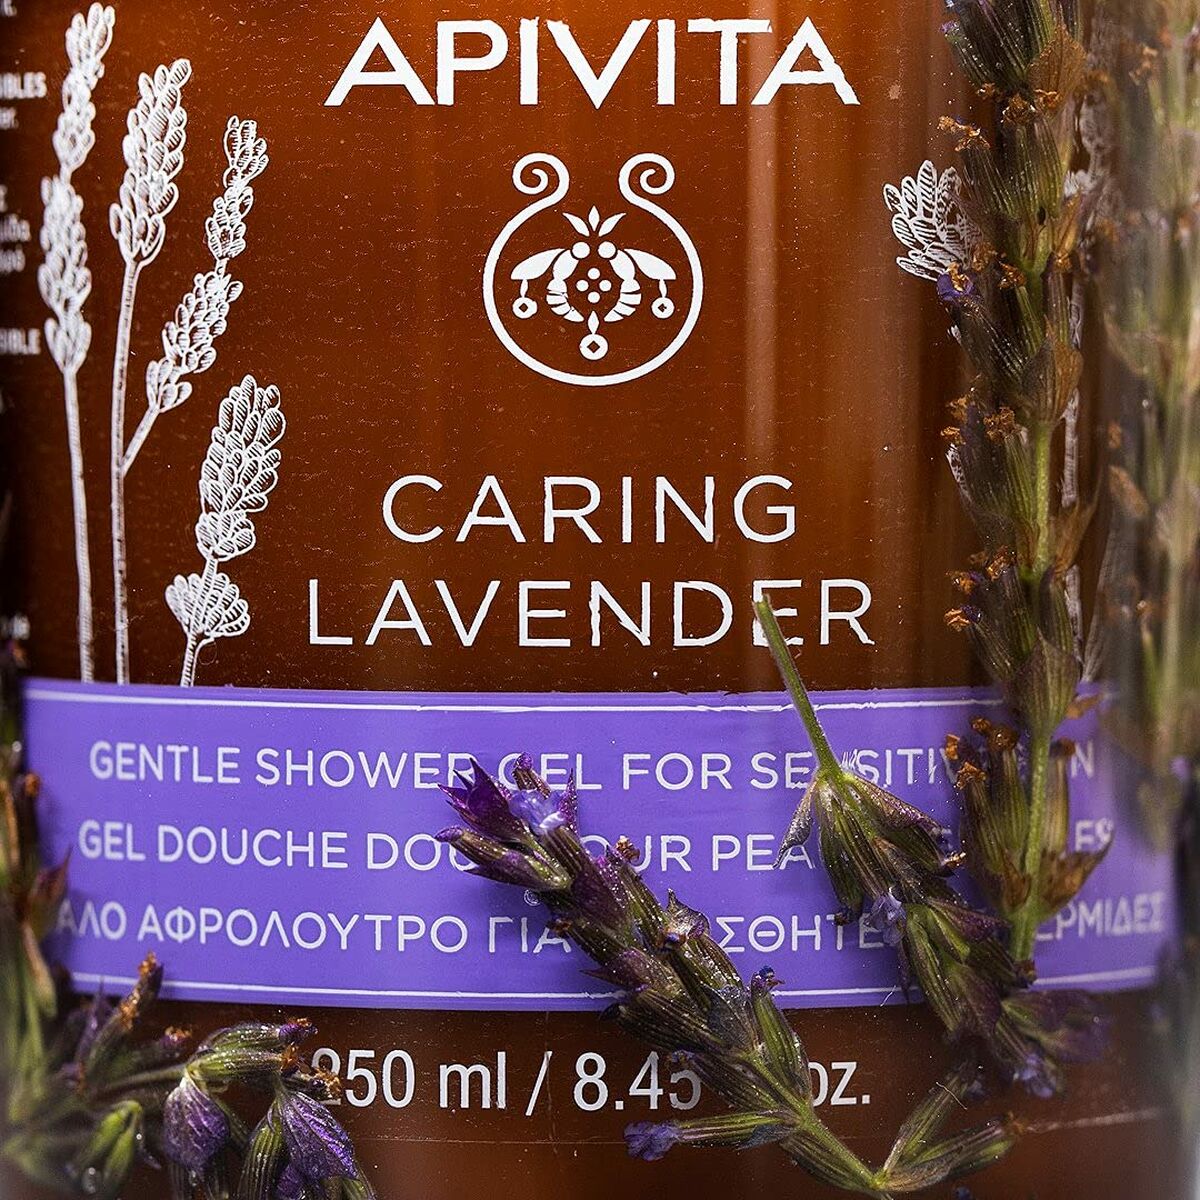 Shower Gel Apivita Caring Lavender 250 ml | Apivita | Aylal Beauty